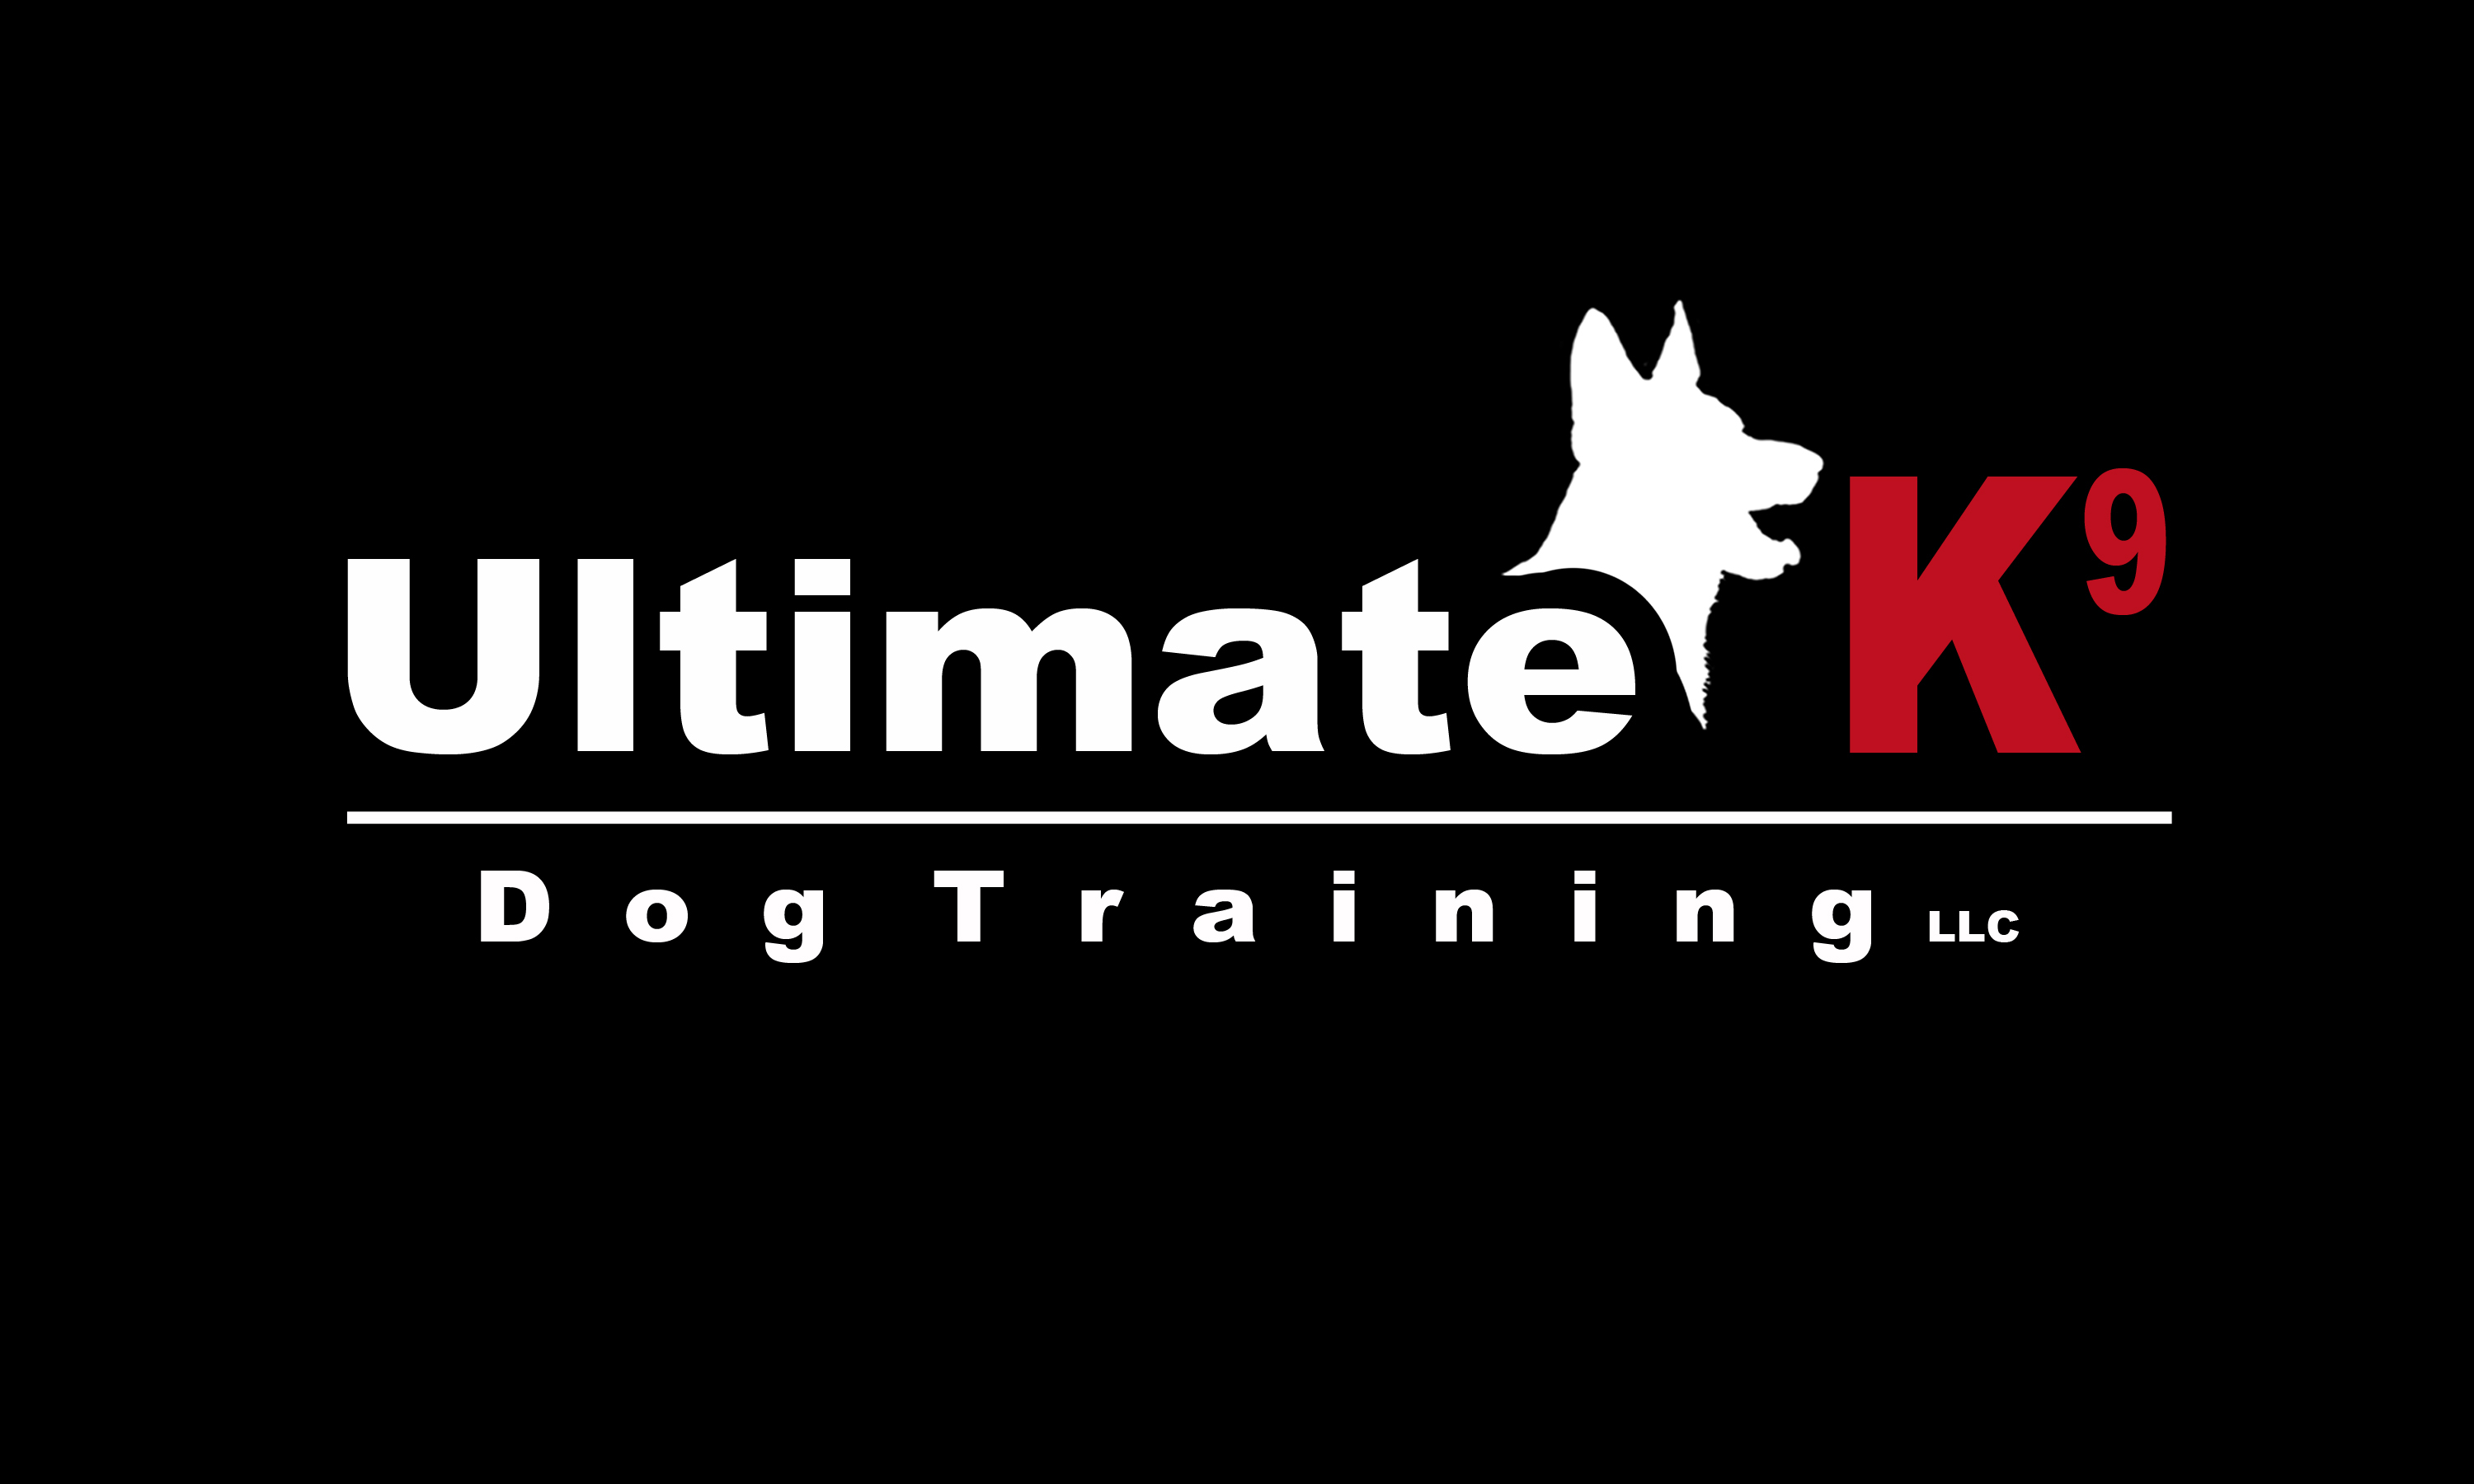 UltimateK9 LLC